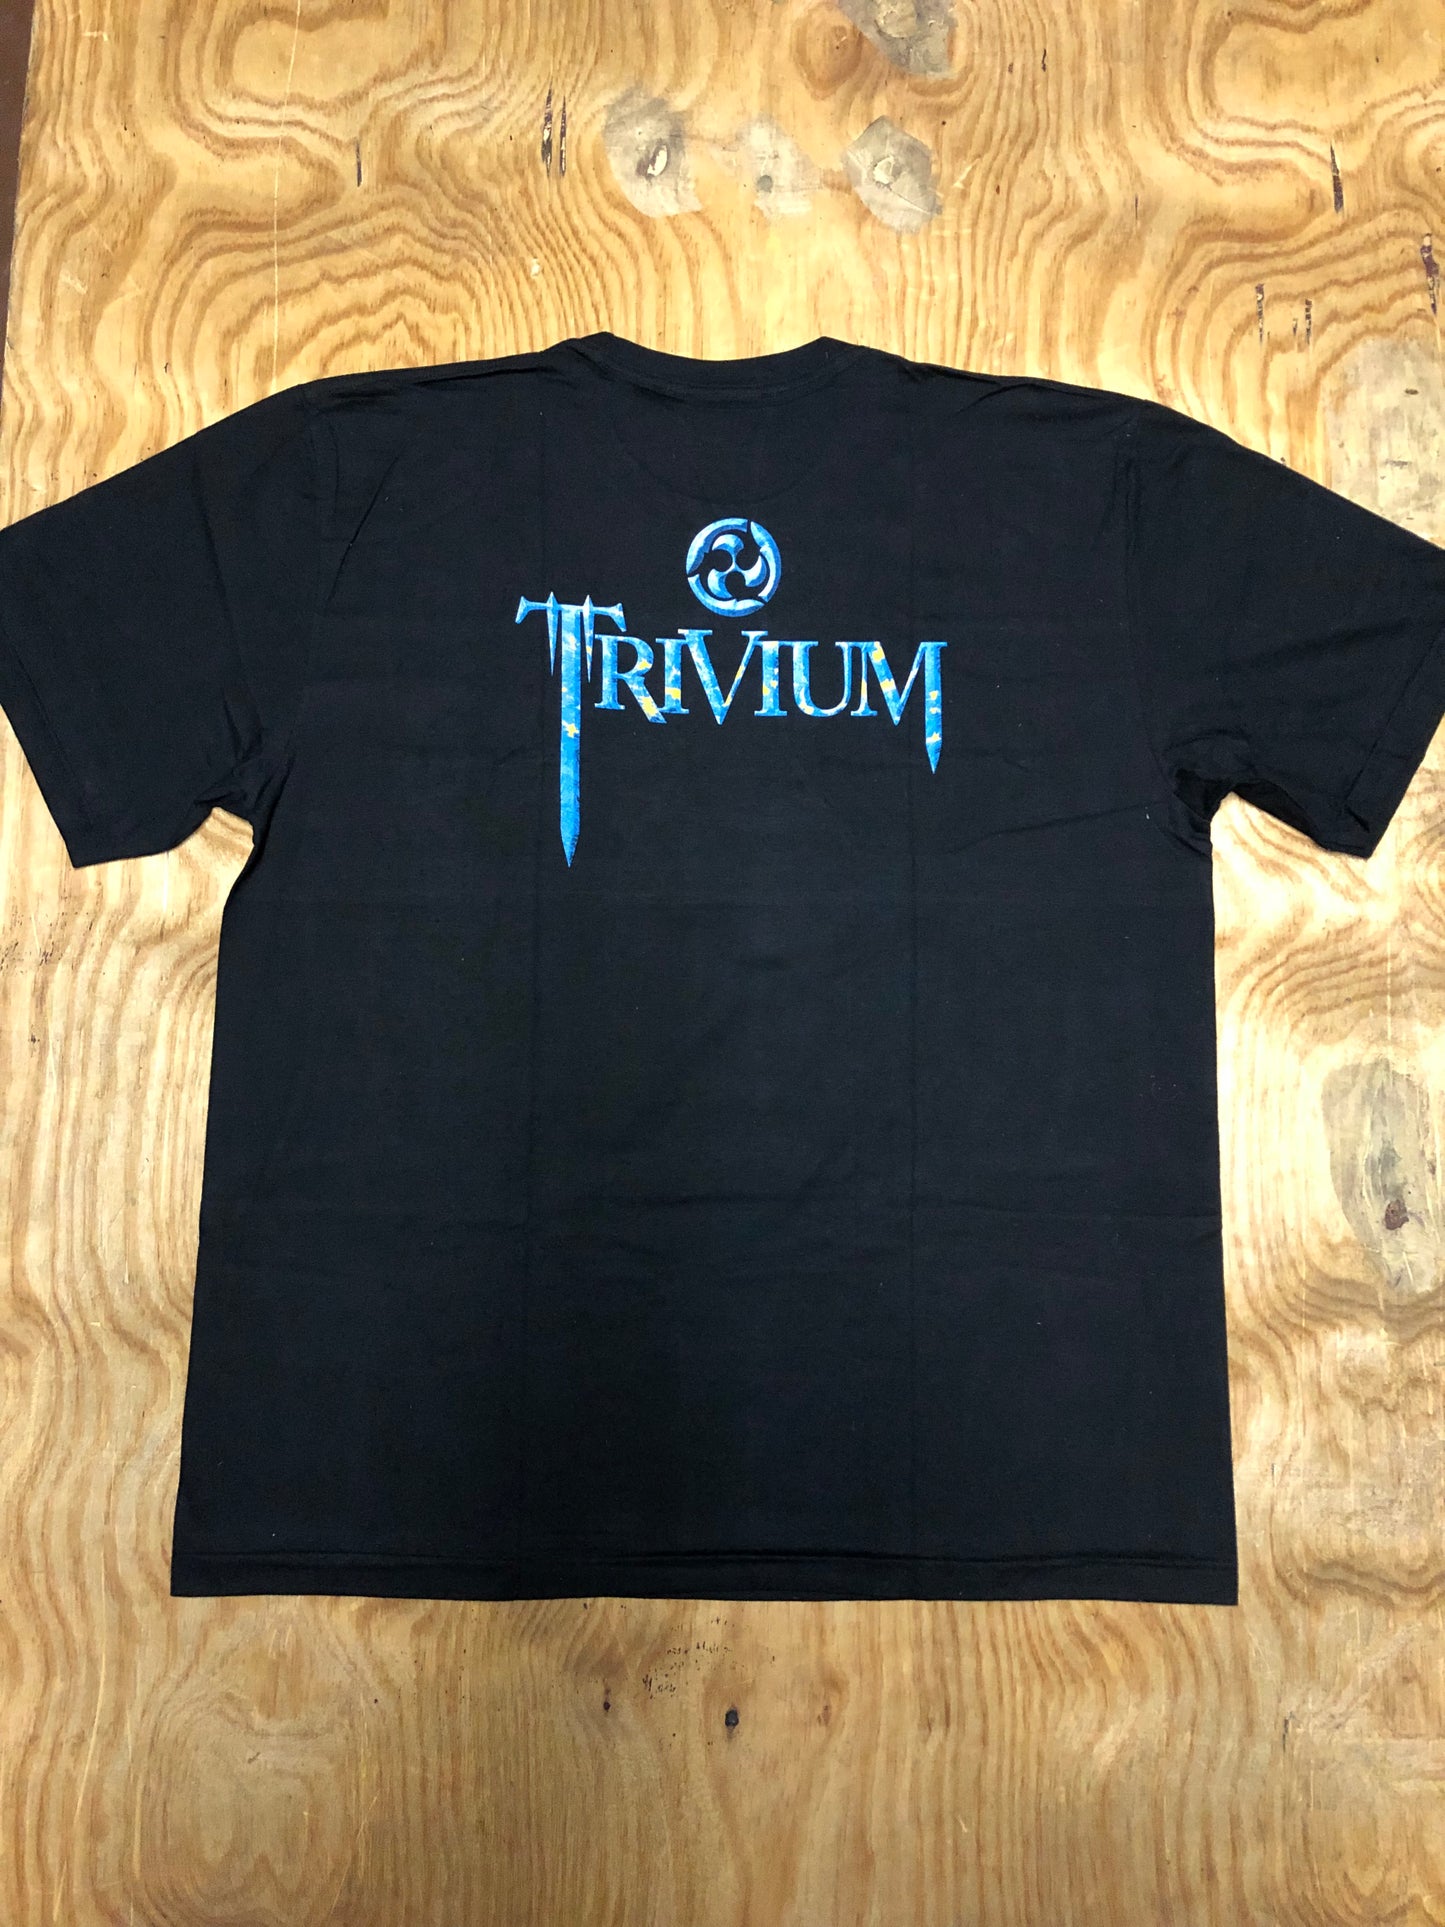 RCK204 - Trivium - The Crusade